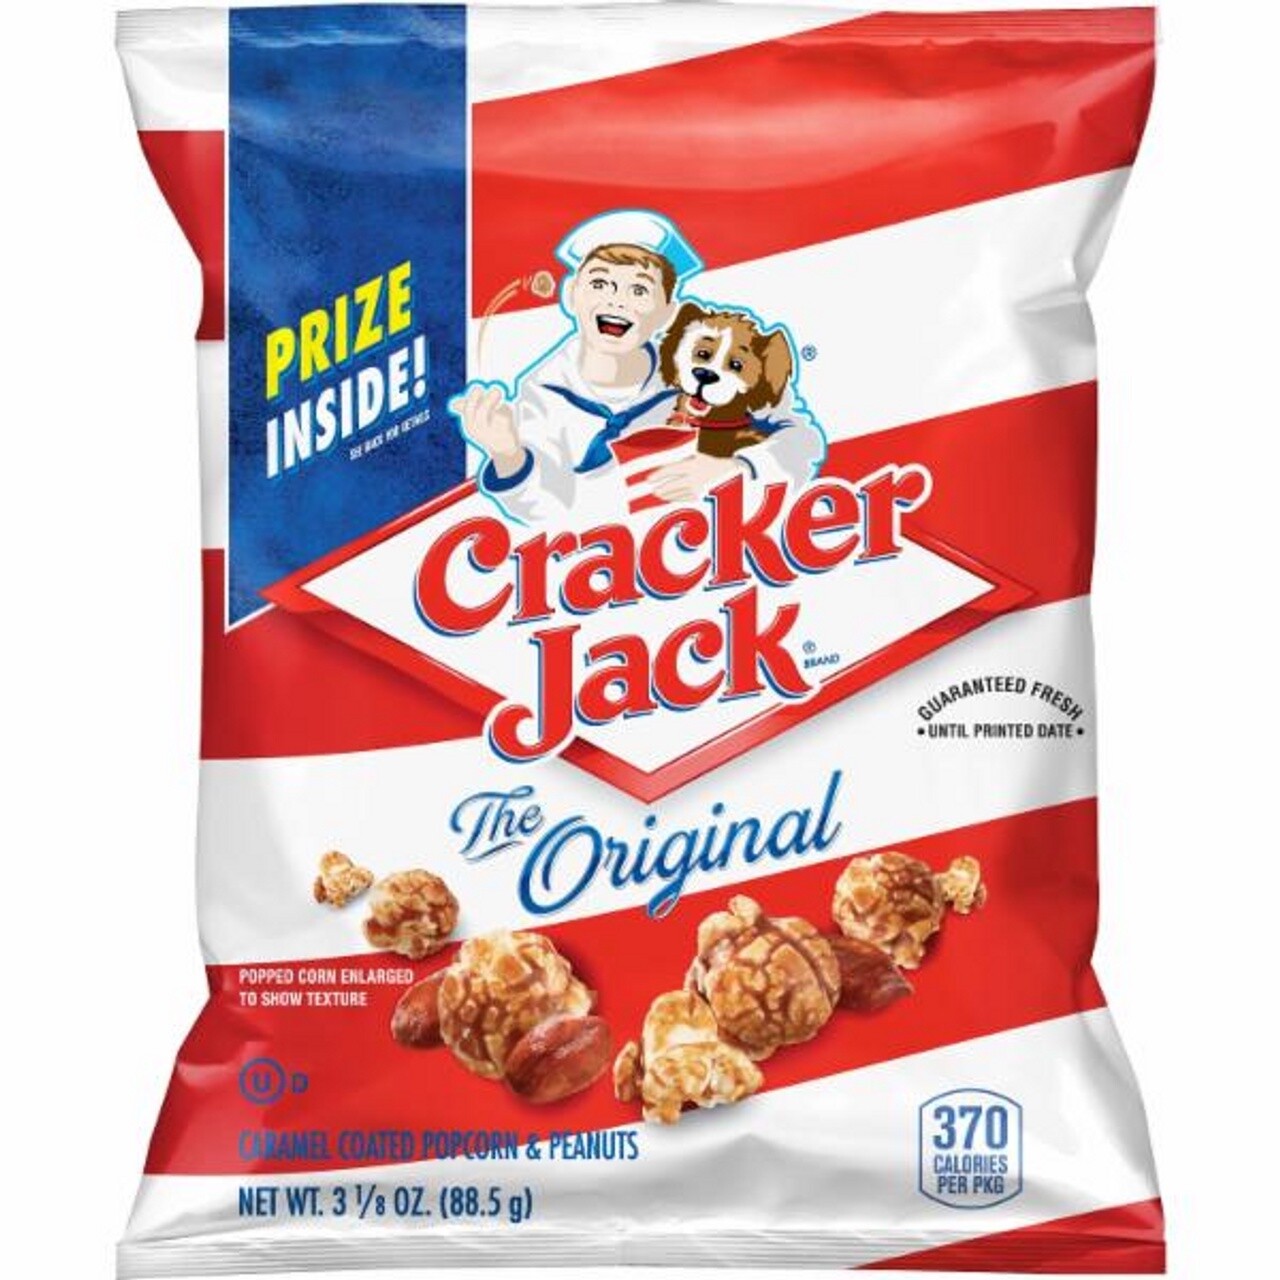 REDUCED BB - Cracker Jacks The Original Caramel Coated Popcorn &amp; Peanuts 88.5g